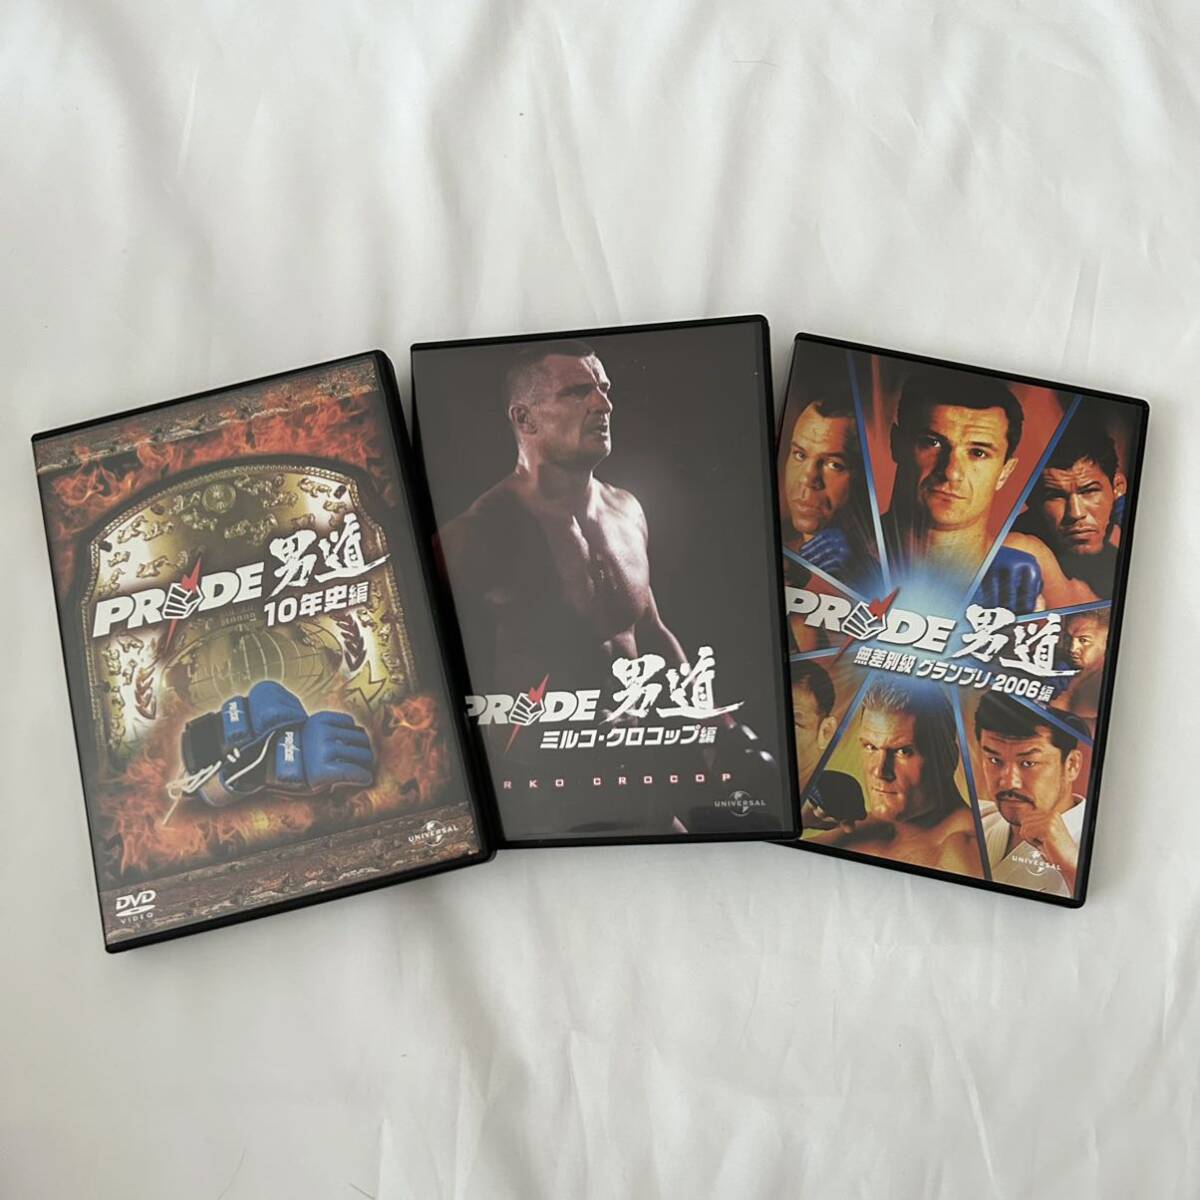 PRIDE男道 DVD BOX 3枚組